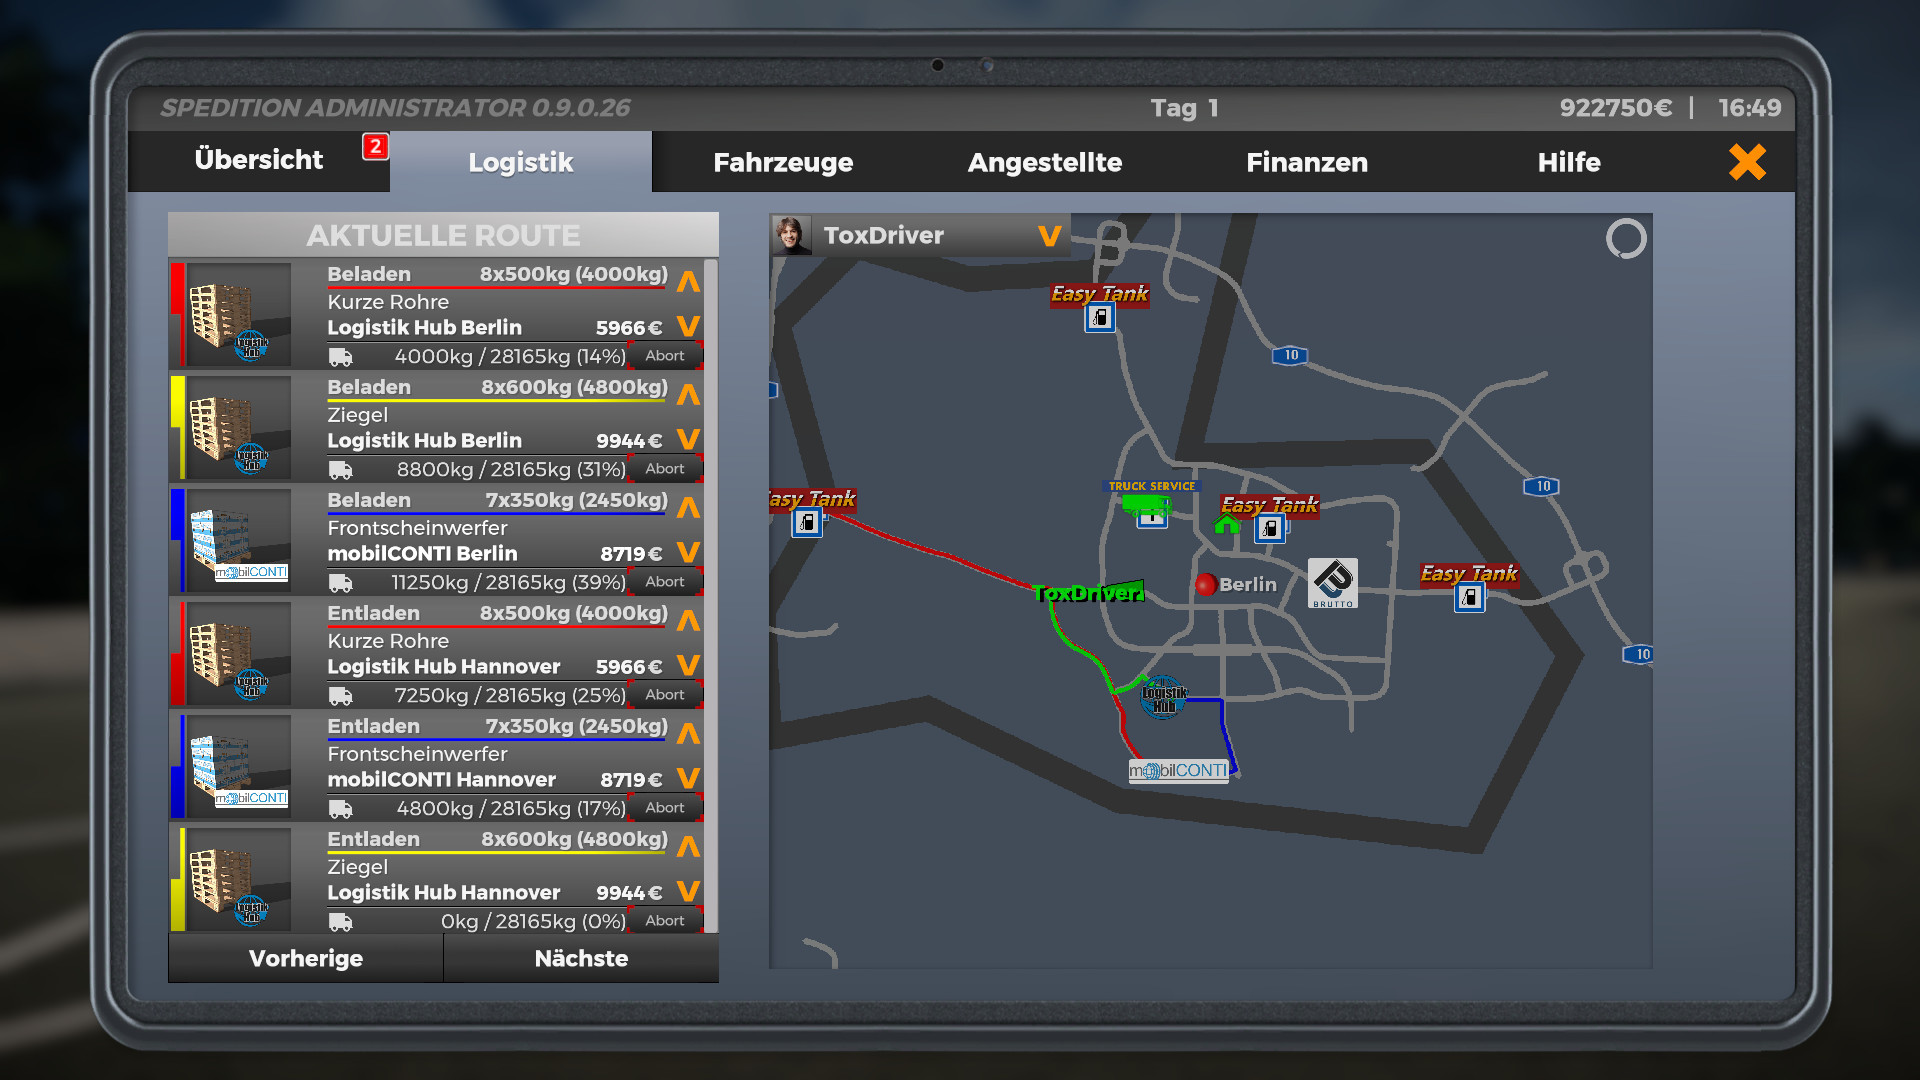 On The Road - Truck Simulator screenshot